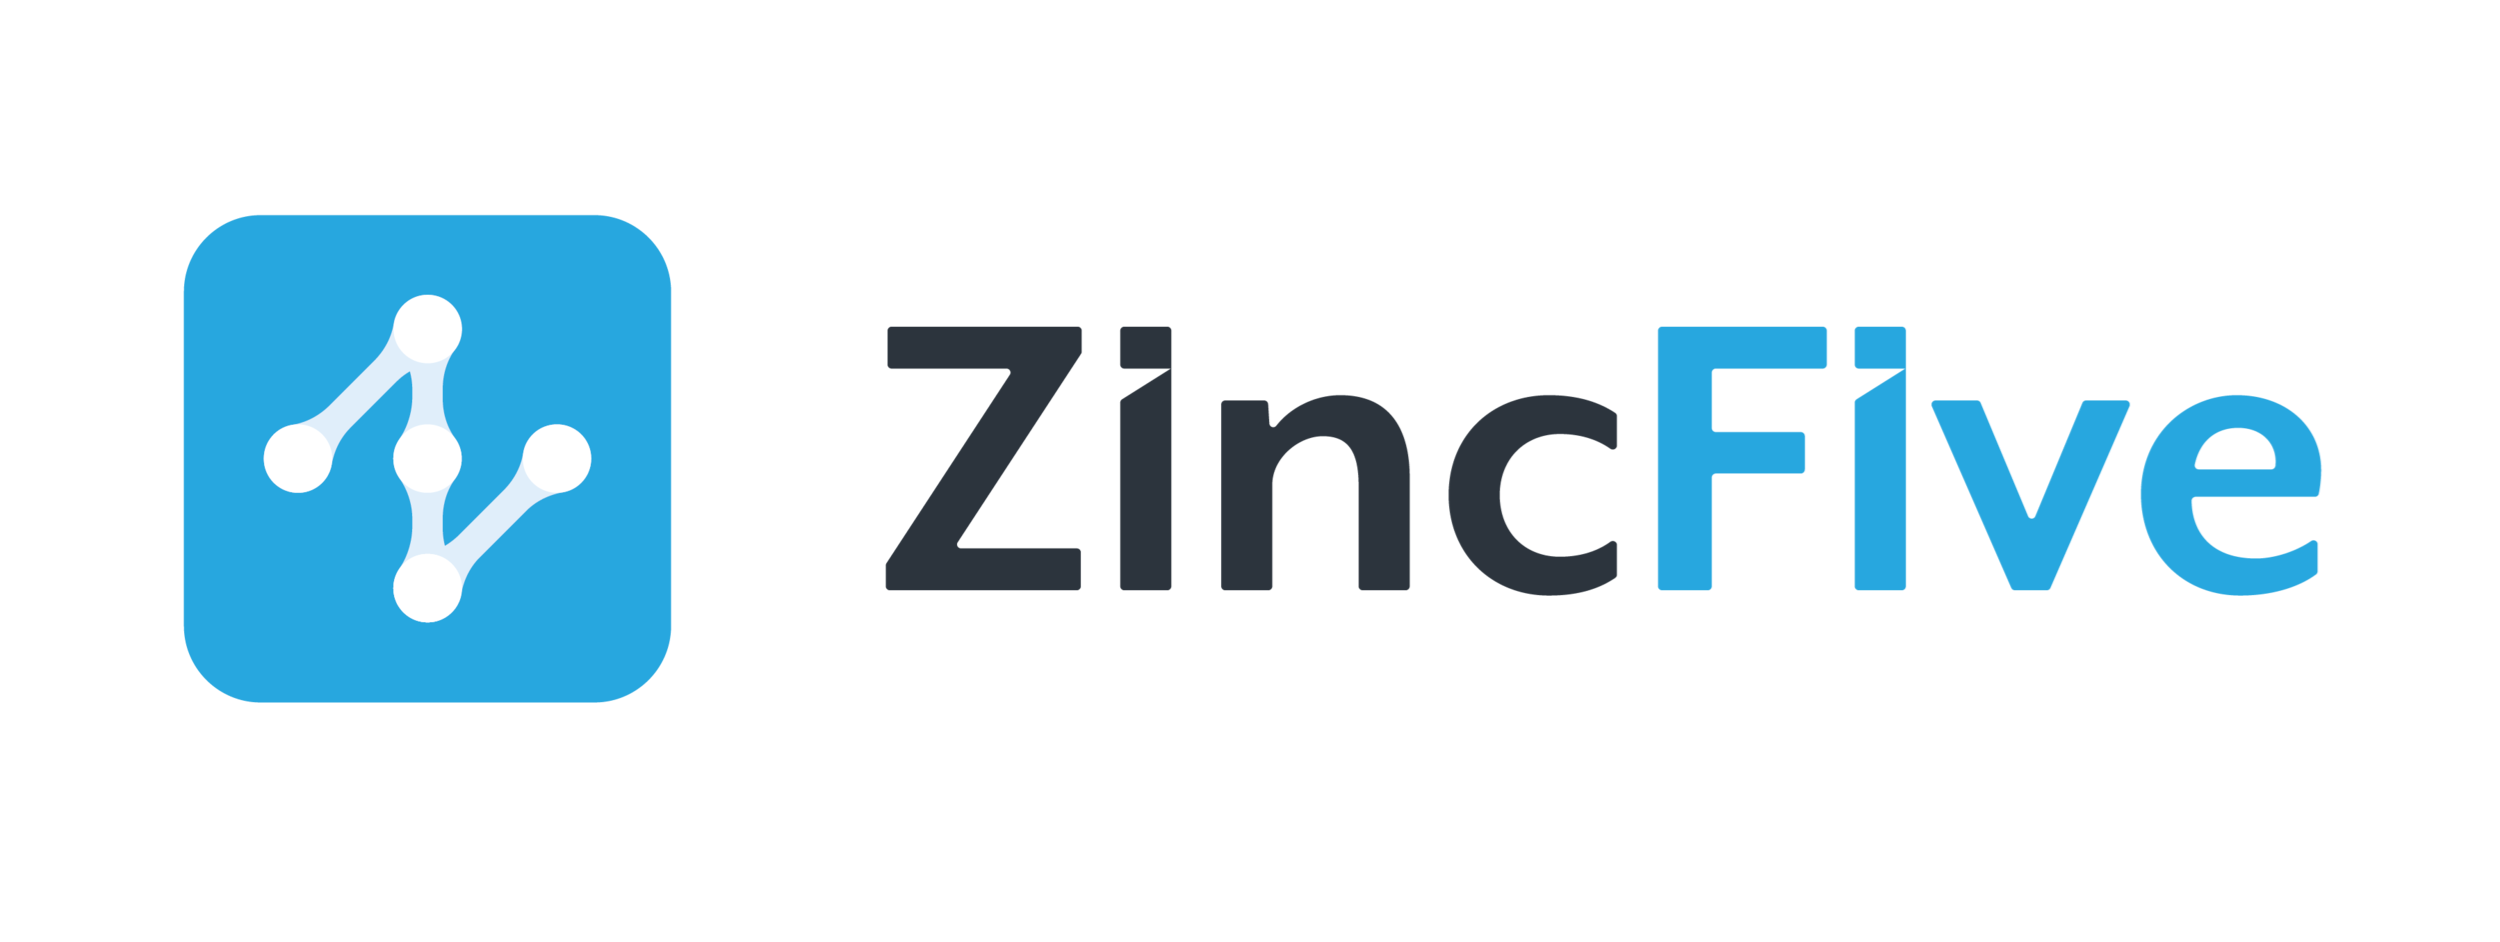 zincfive-logo-2018-01